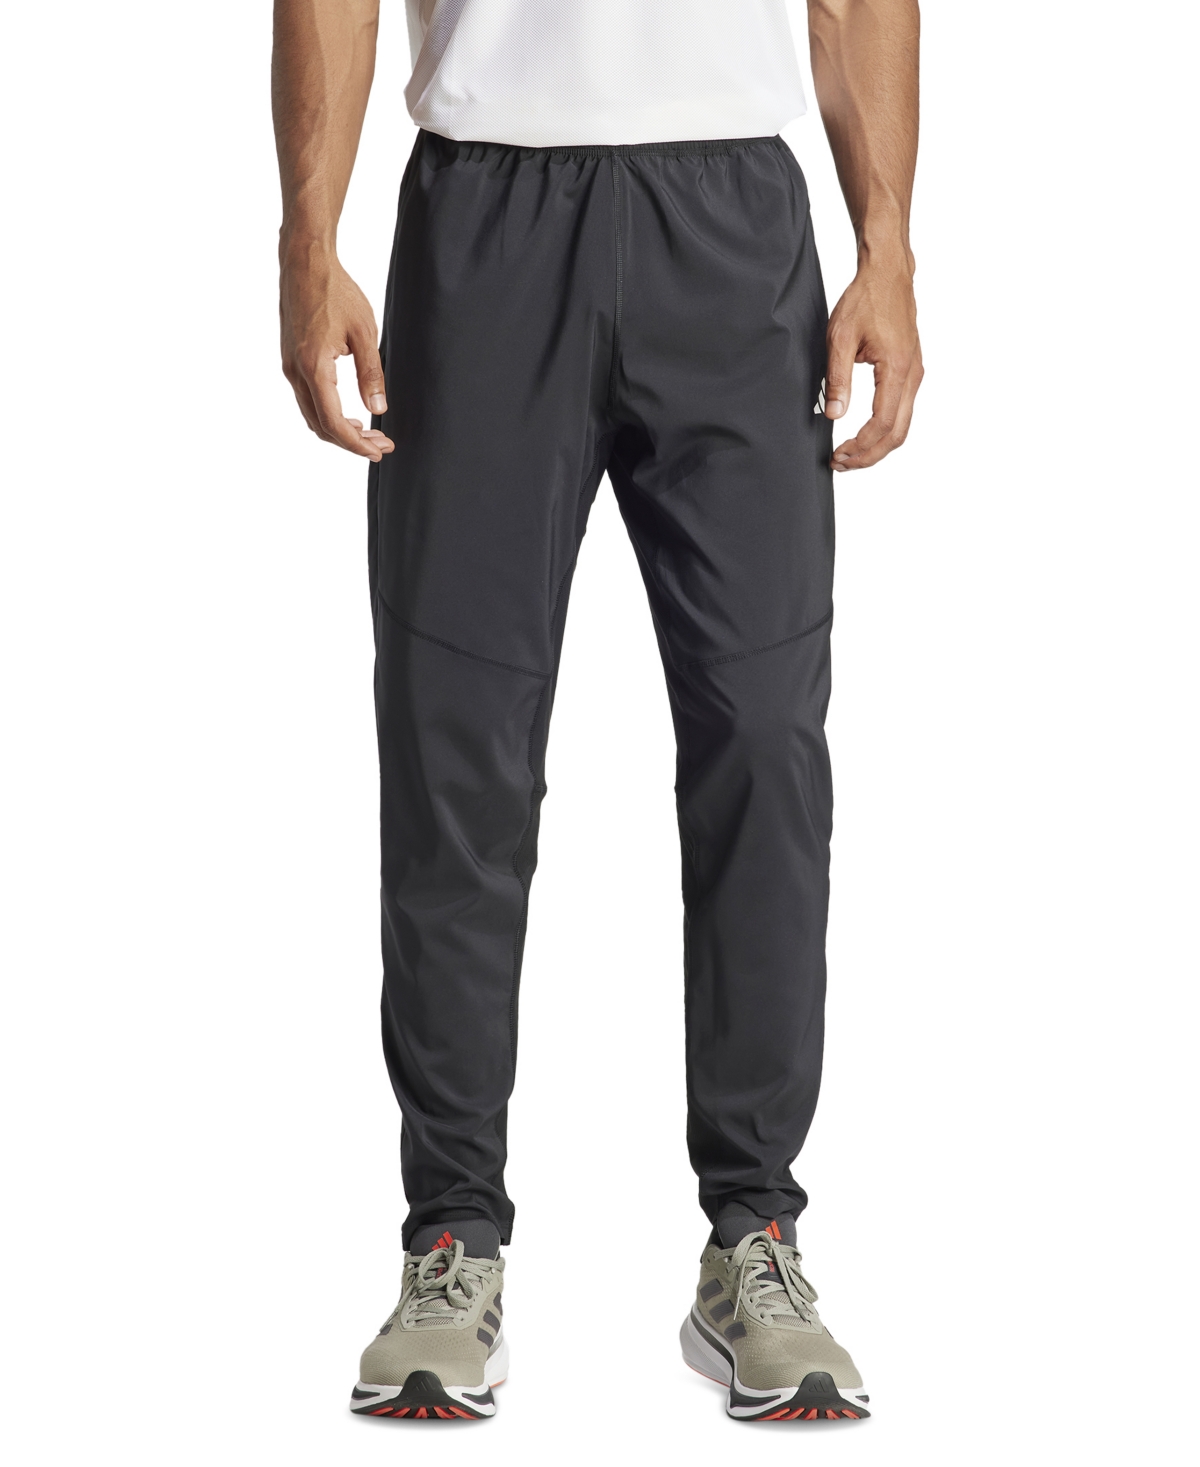 Adidas Originals Men's Own The Run Woven Moisture-wicking Pants In Black